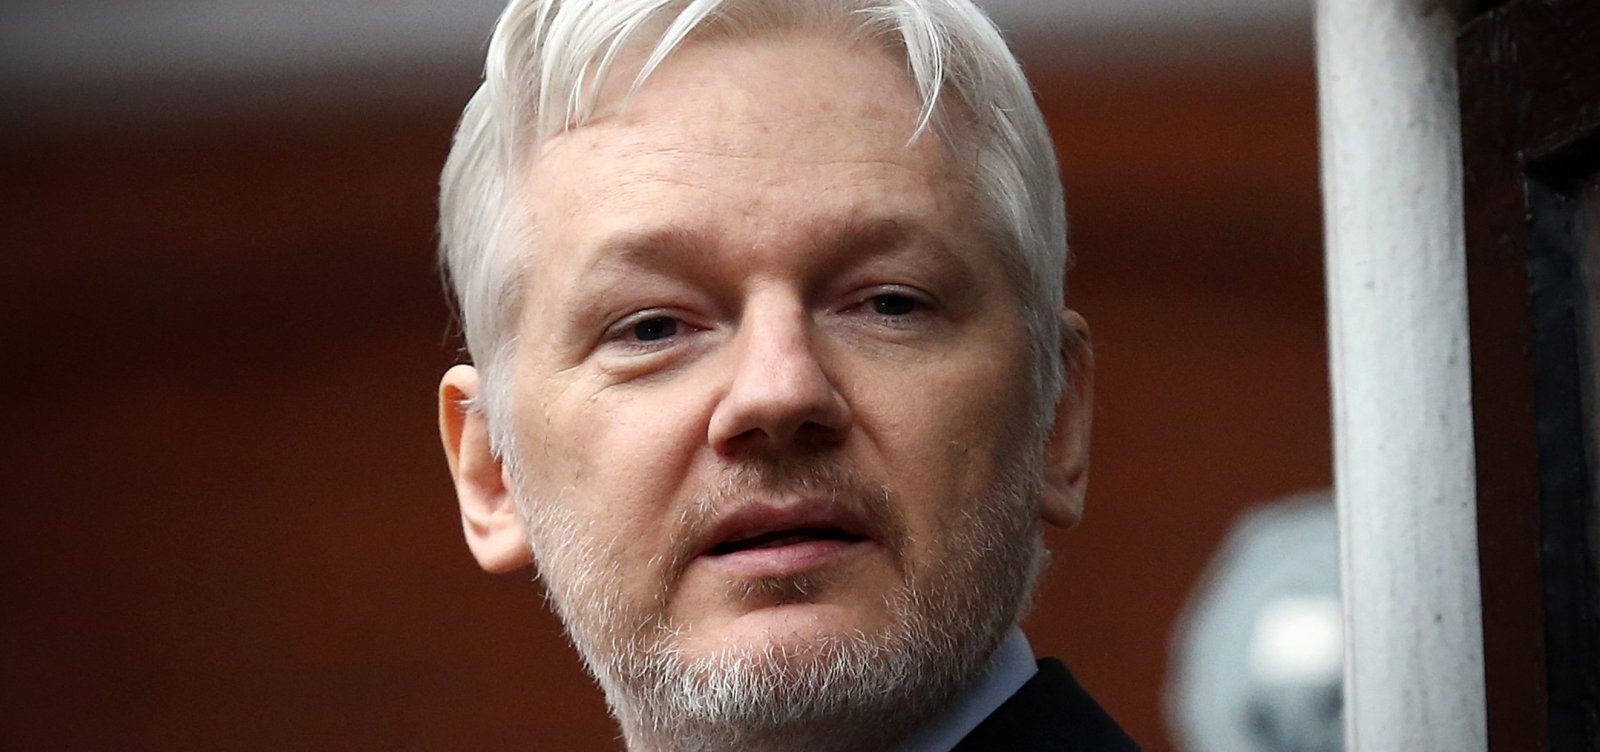 Promotores americanos indiciaram Julian Assange em segredo, diz jornal